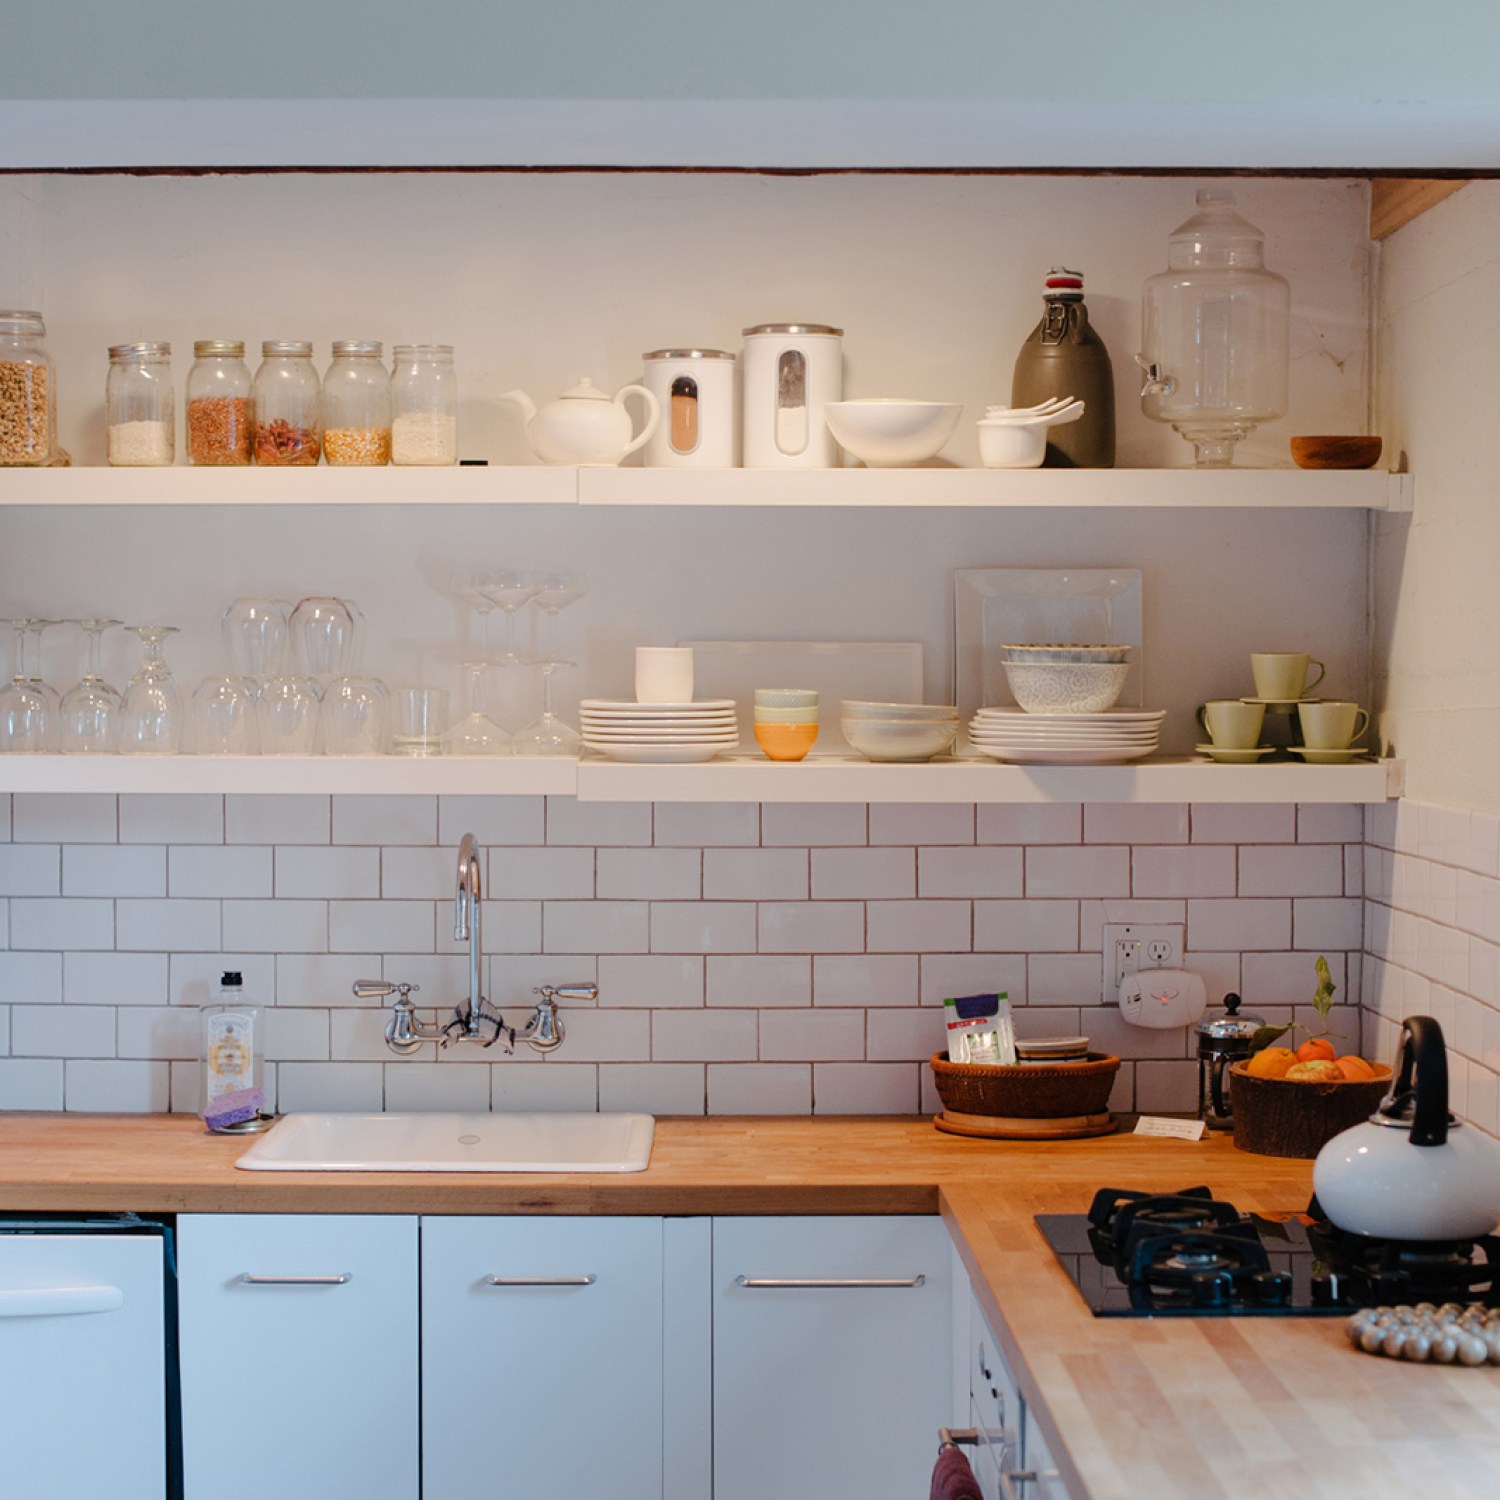 How to Design a Kitchen   Kitchen Layout Ideas   HouseLogic